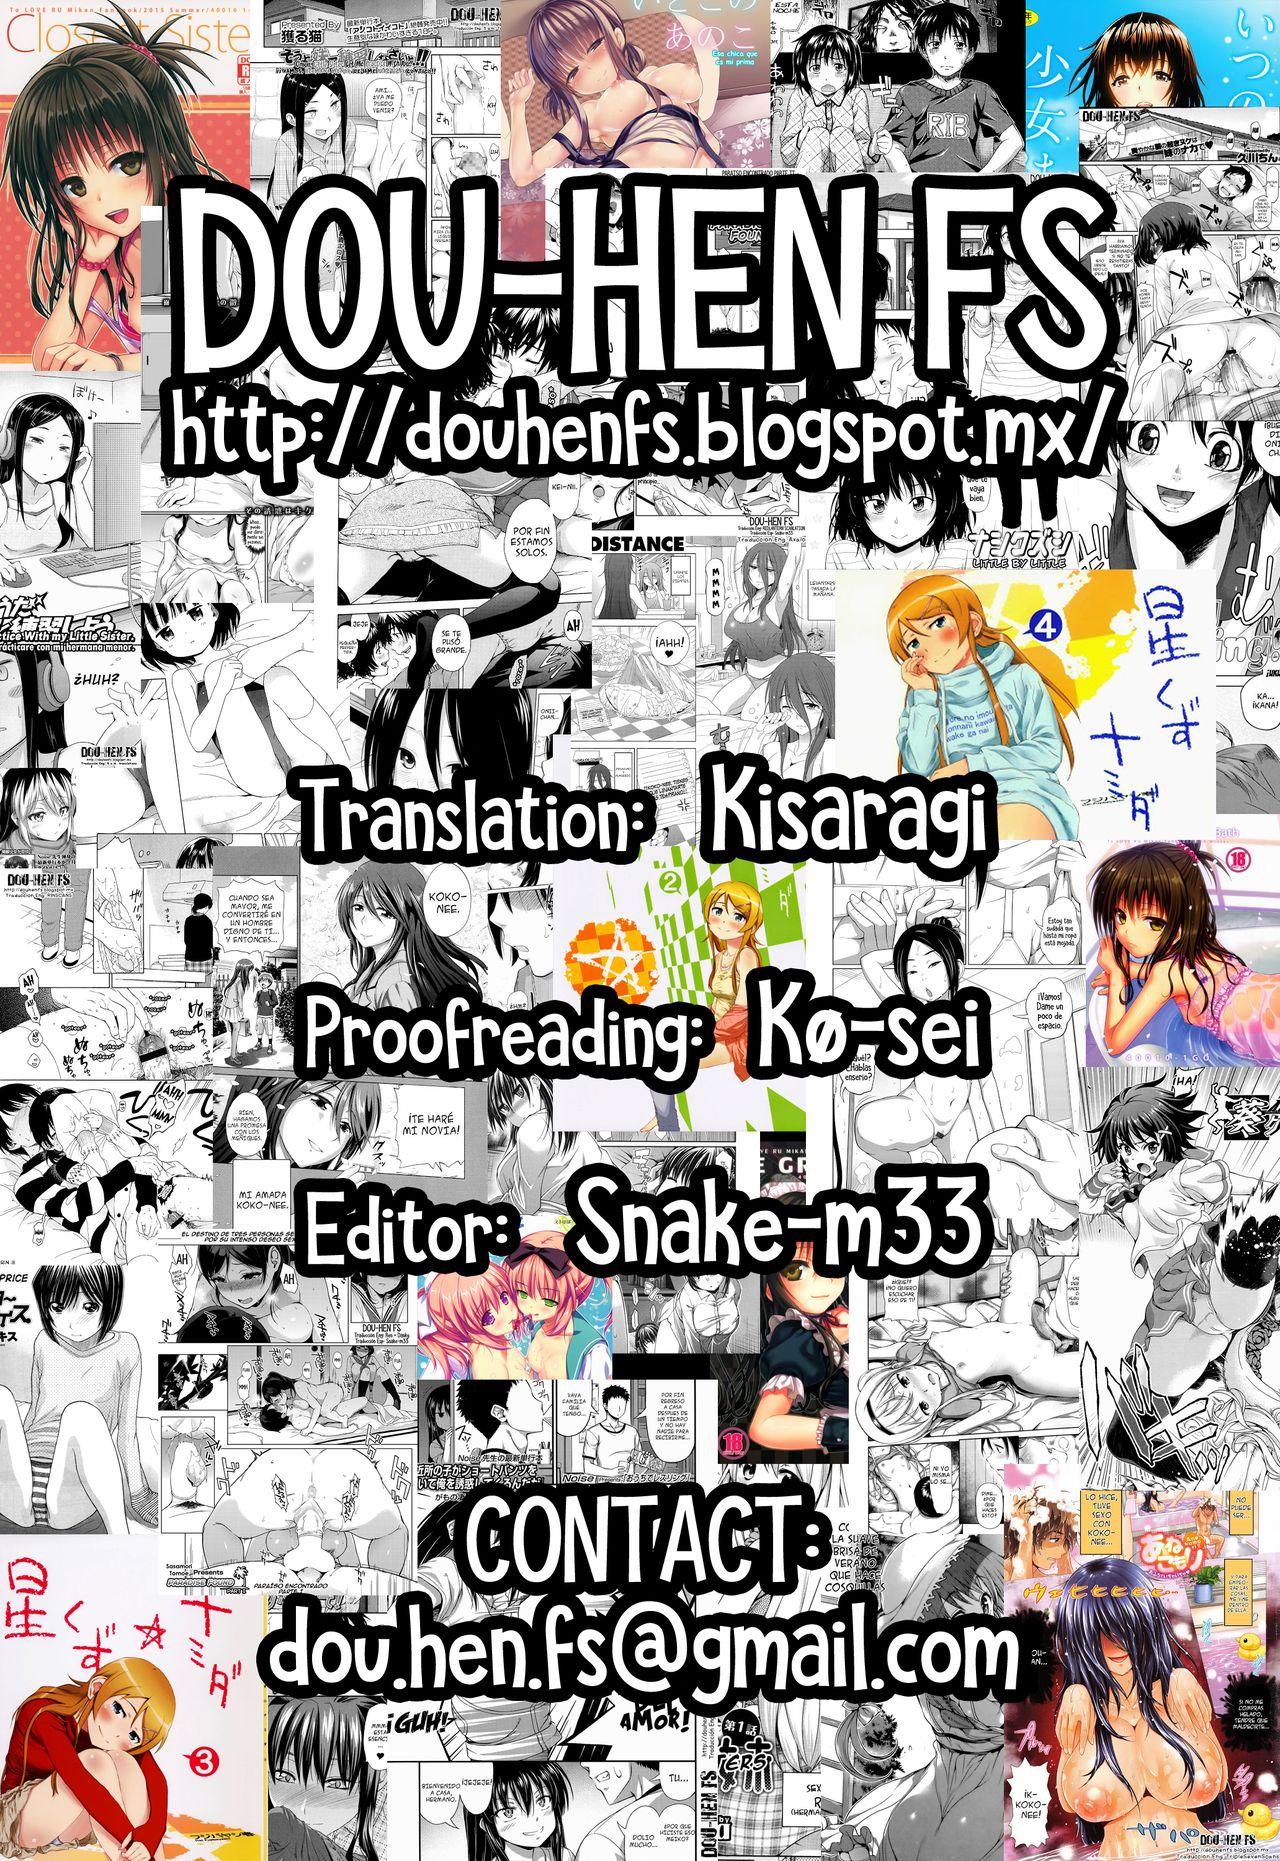 Naughty Dokidoki Free Time Free Rough Porn - Page 25